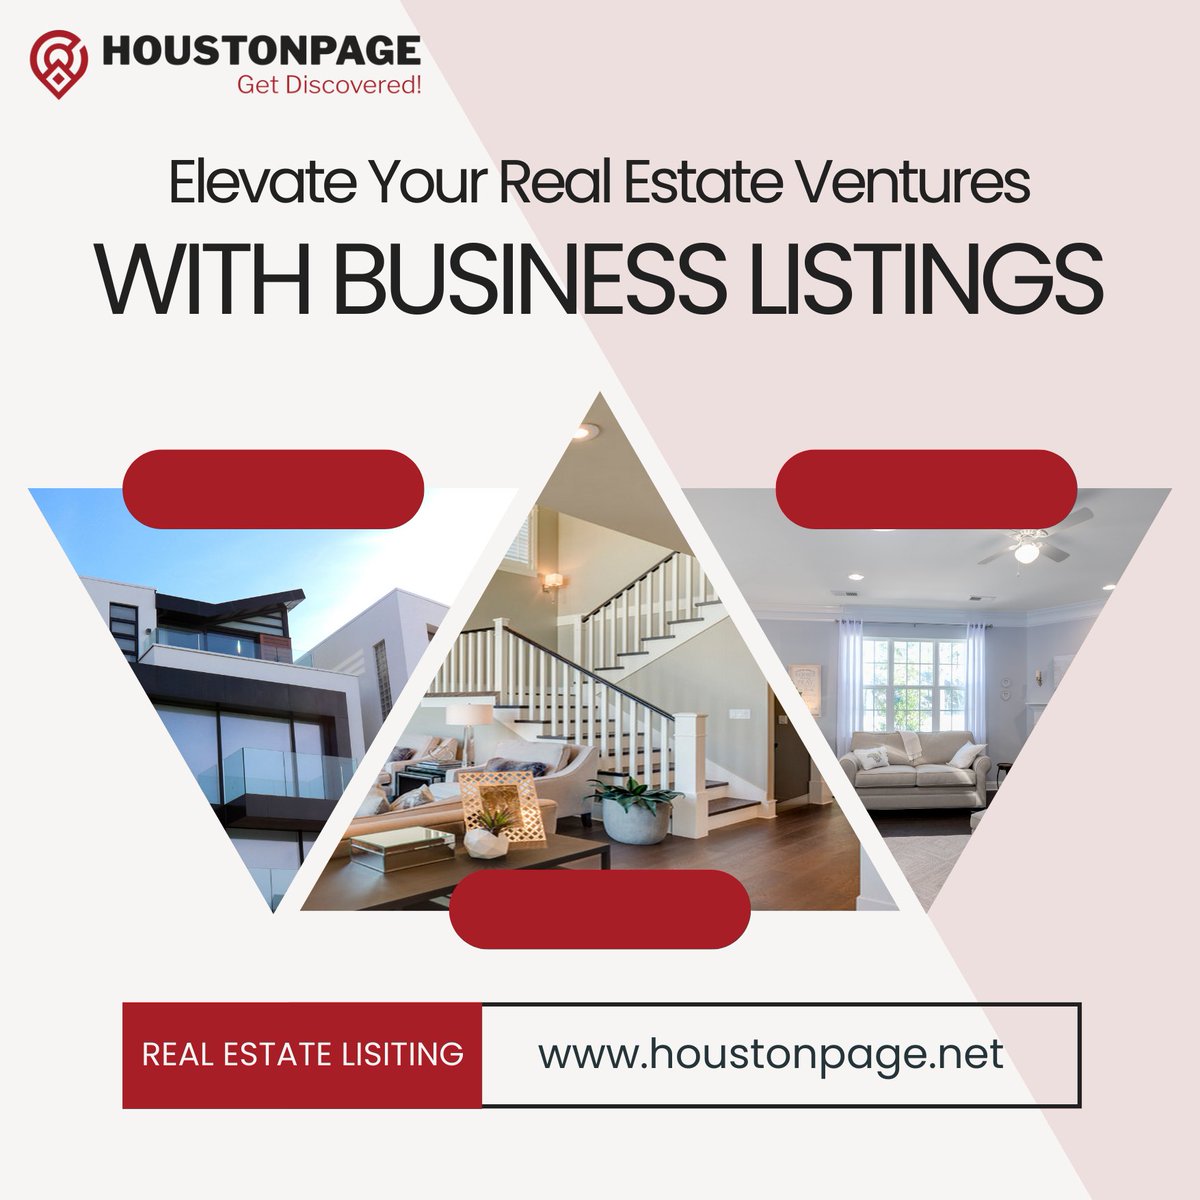 Search Houston's Exclusive Real Estate Listings with HoustonPage!

houstonpage.net

#RealEstate #HoustonProperties #DreamHome #PropertyListings #ExploreTheWorld #LocalBusinesses #BusinessSuccess #businesslisting #business #BusinessListing #businessgrowth #Houston